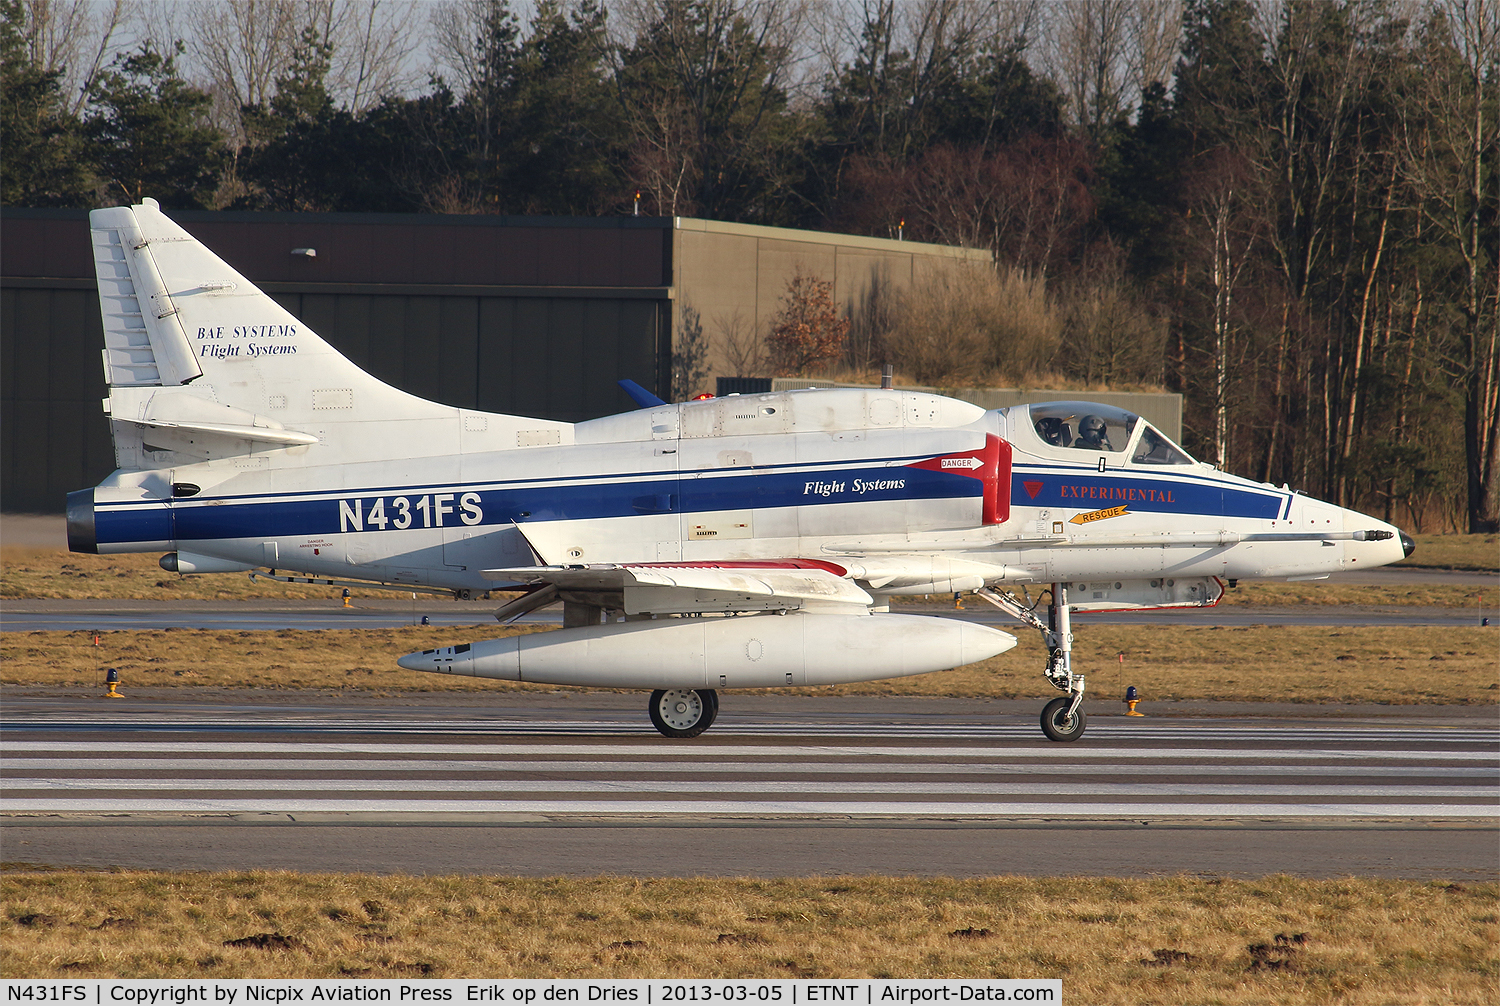 N431FS, 1972 Douglas A-4N Skyhawk C/N 14504, N431FS is painted in standard Flight System colours although in service with BAe